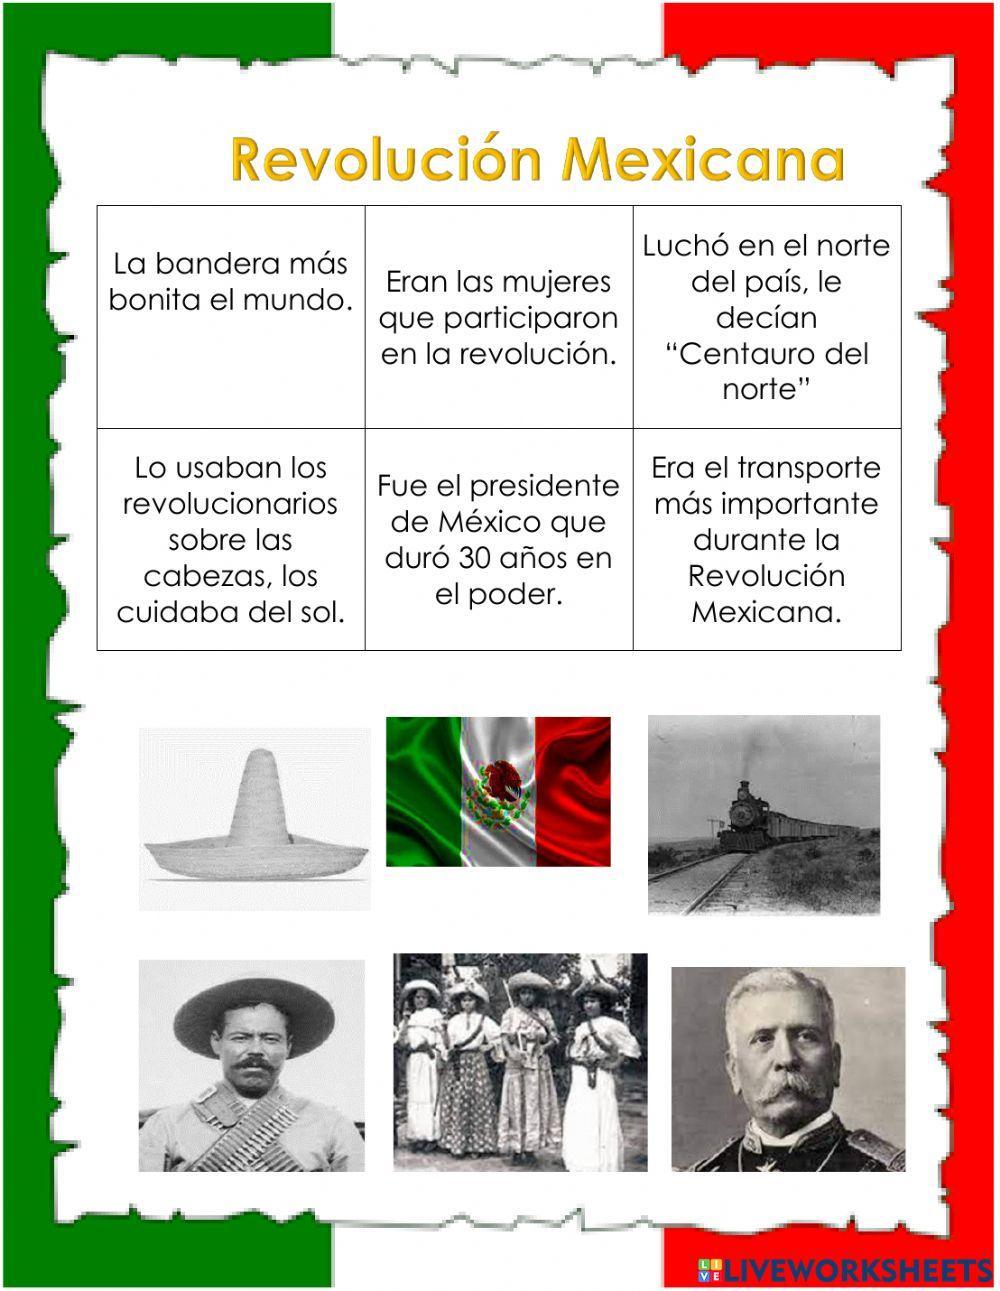 Revolución mexicana online pdf activity | Live Worksheets